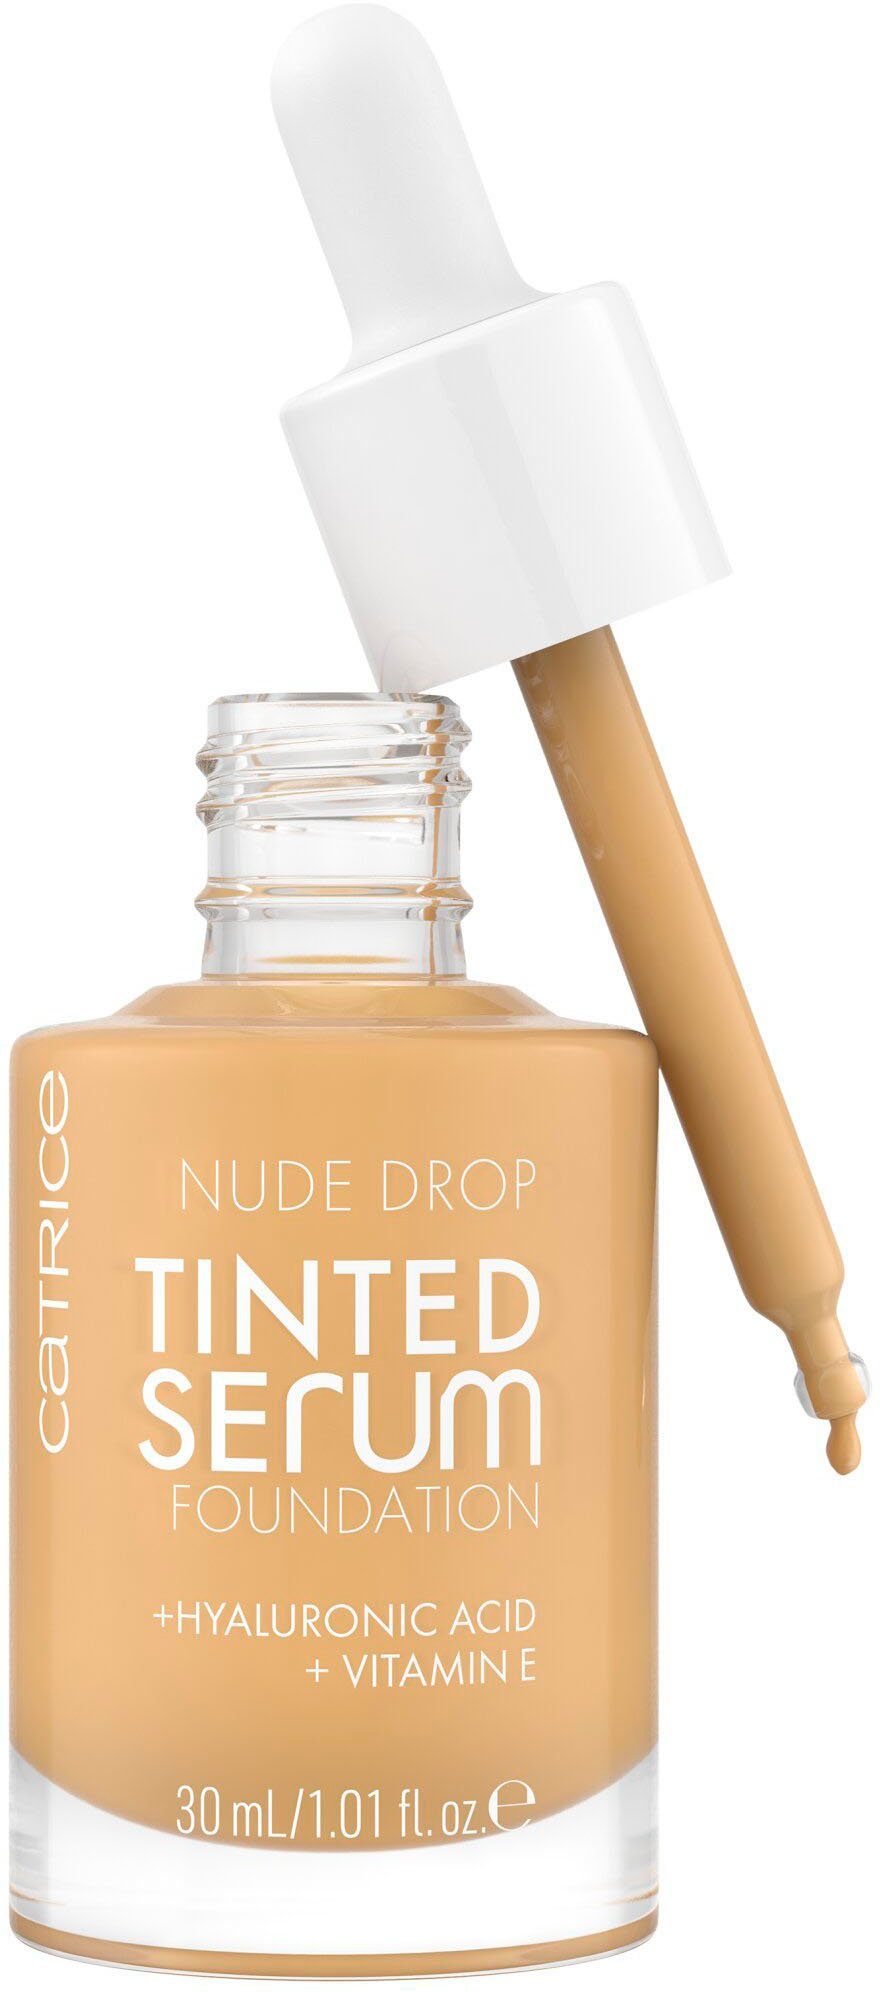 Drop nude 038W Tinted Nude Foundation Foundation Catrice Serum